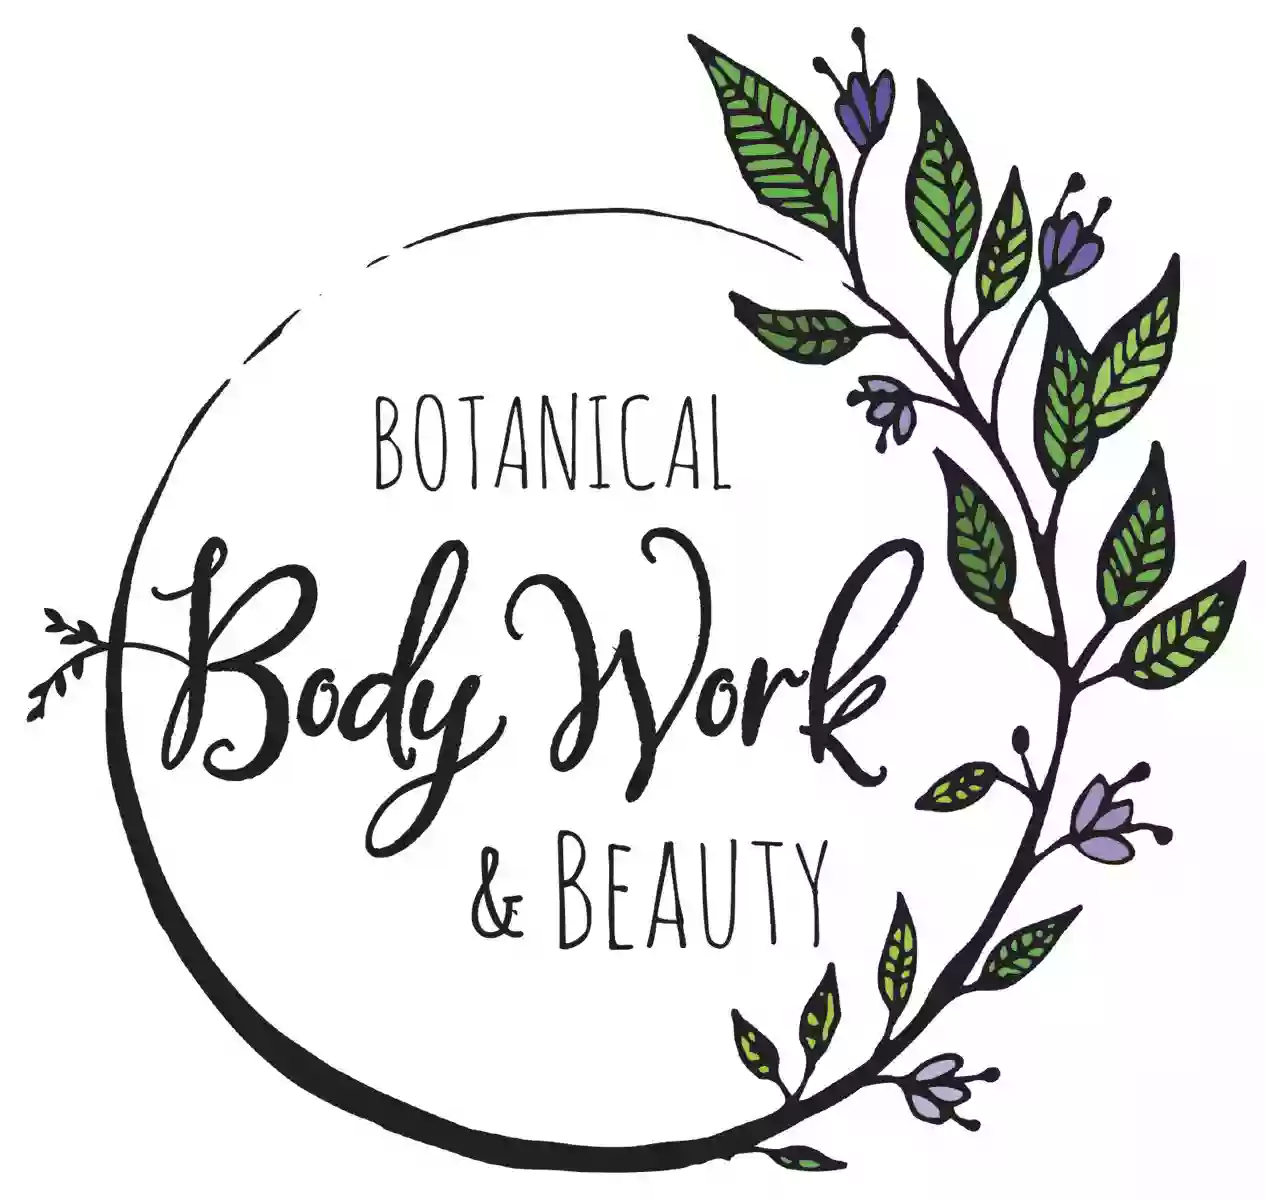 Botanical Bodywork & Beauty